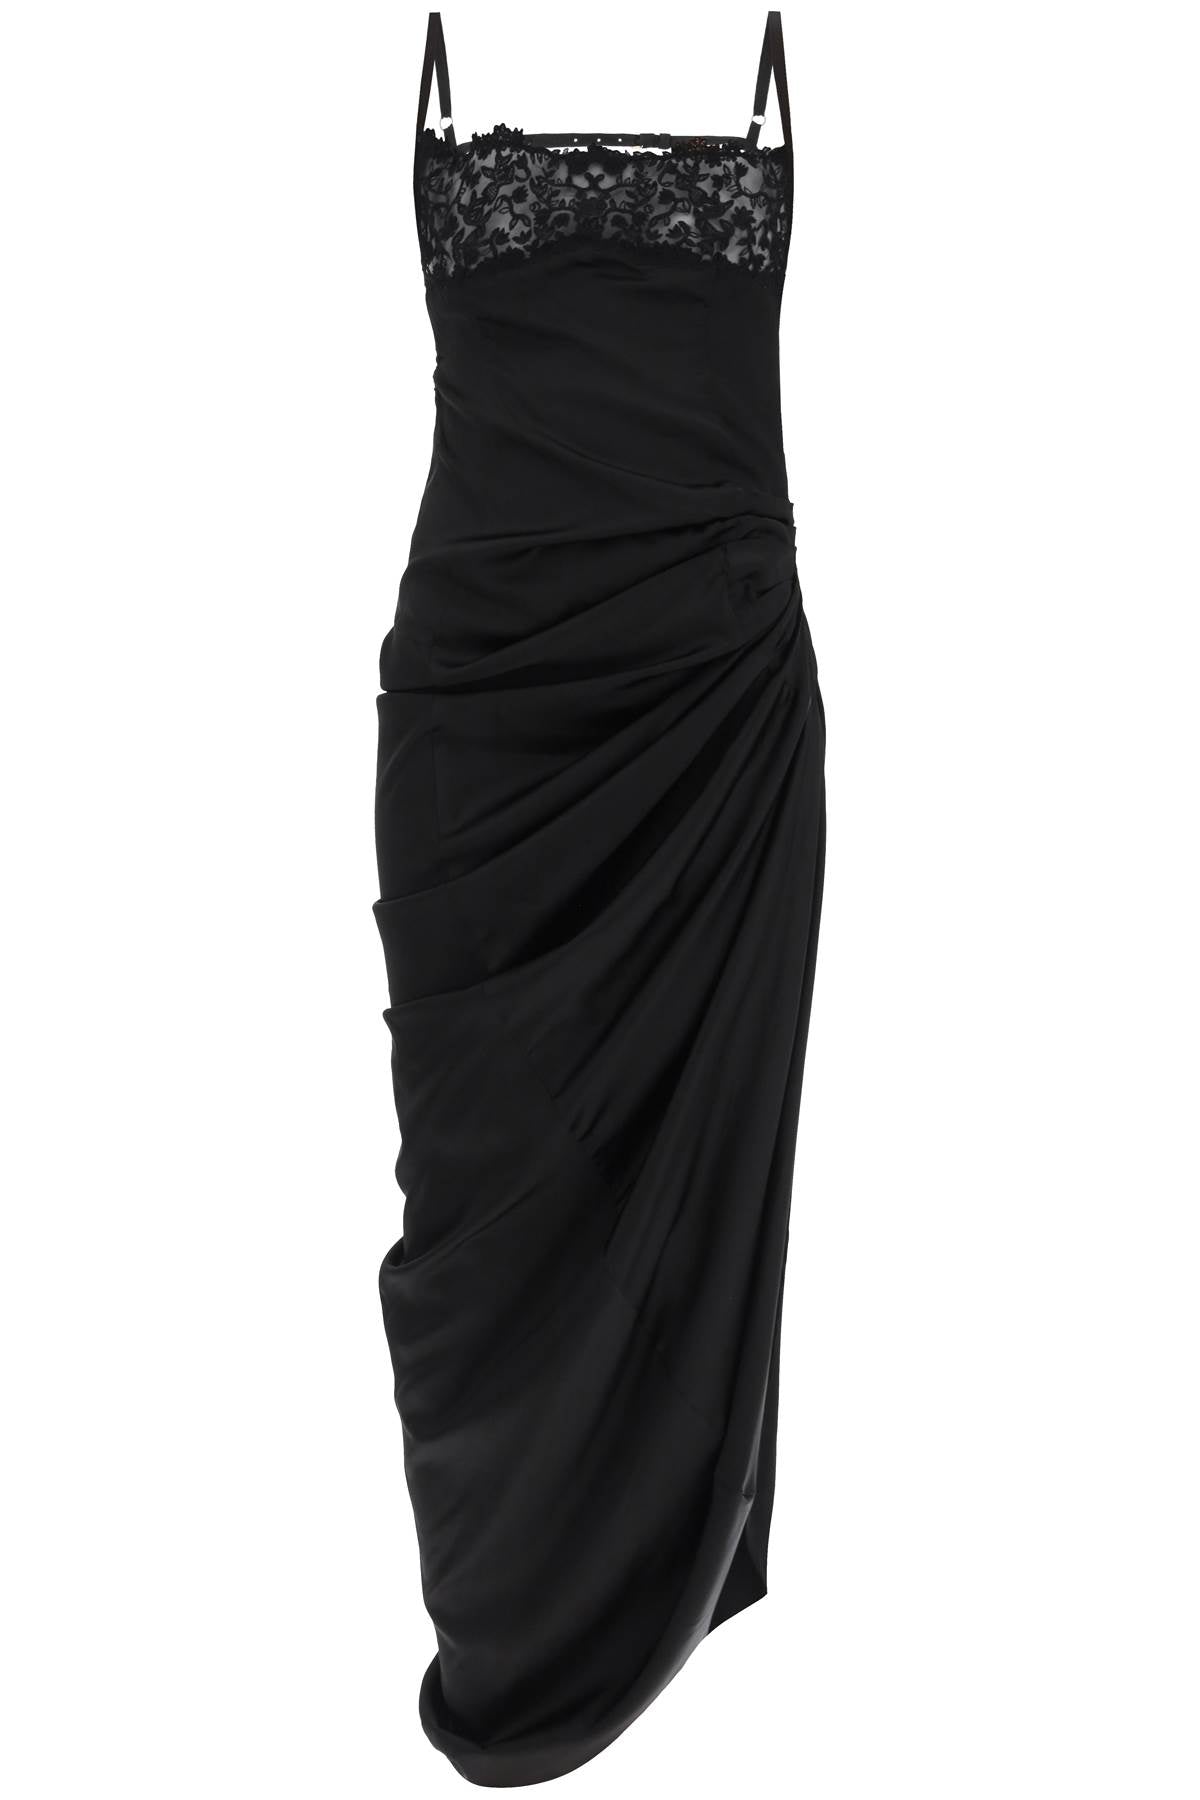 JACQUEMUS The Saudade Long Dress - Black